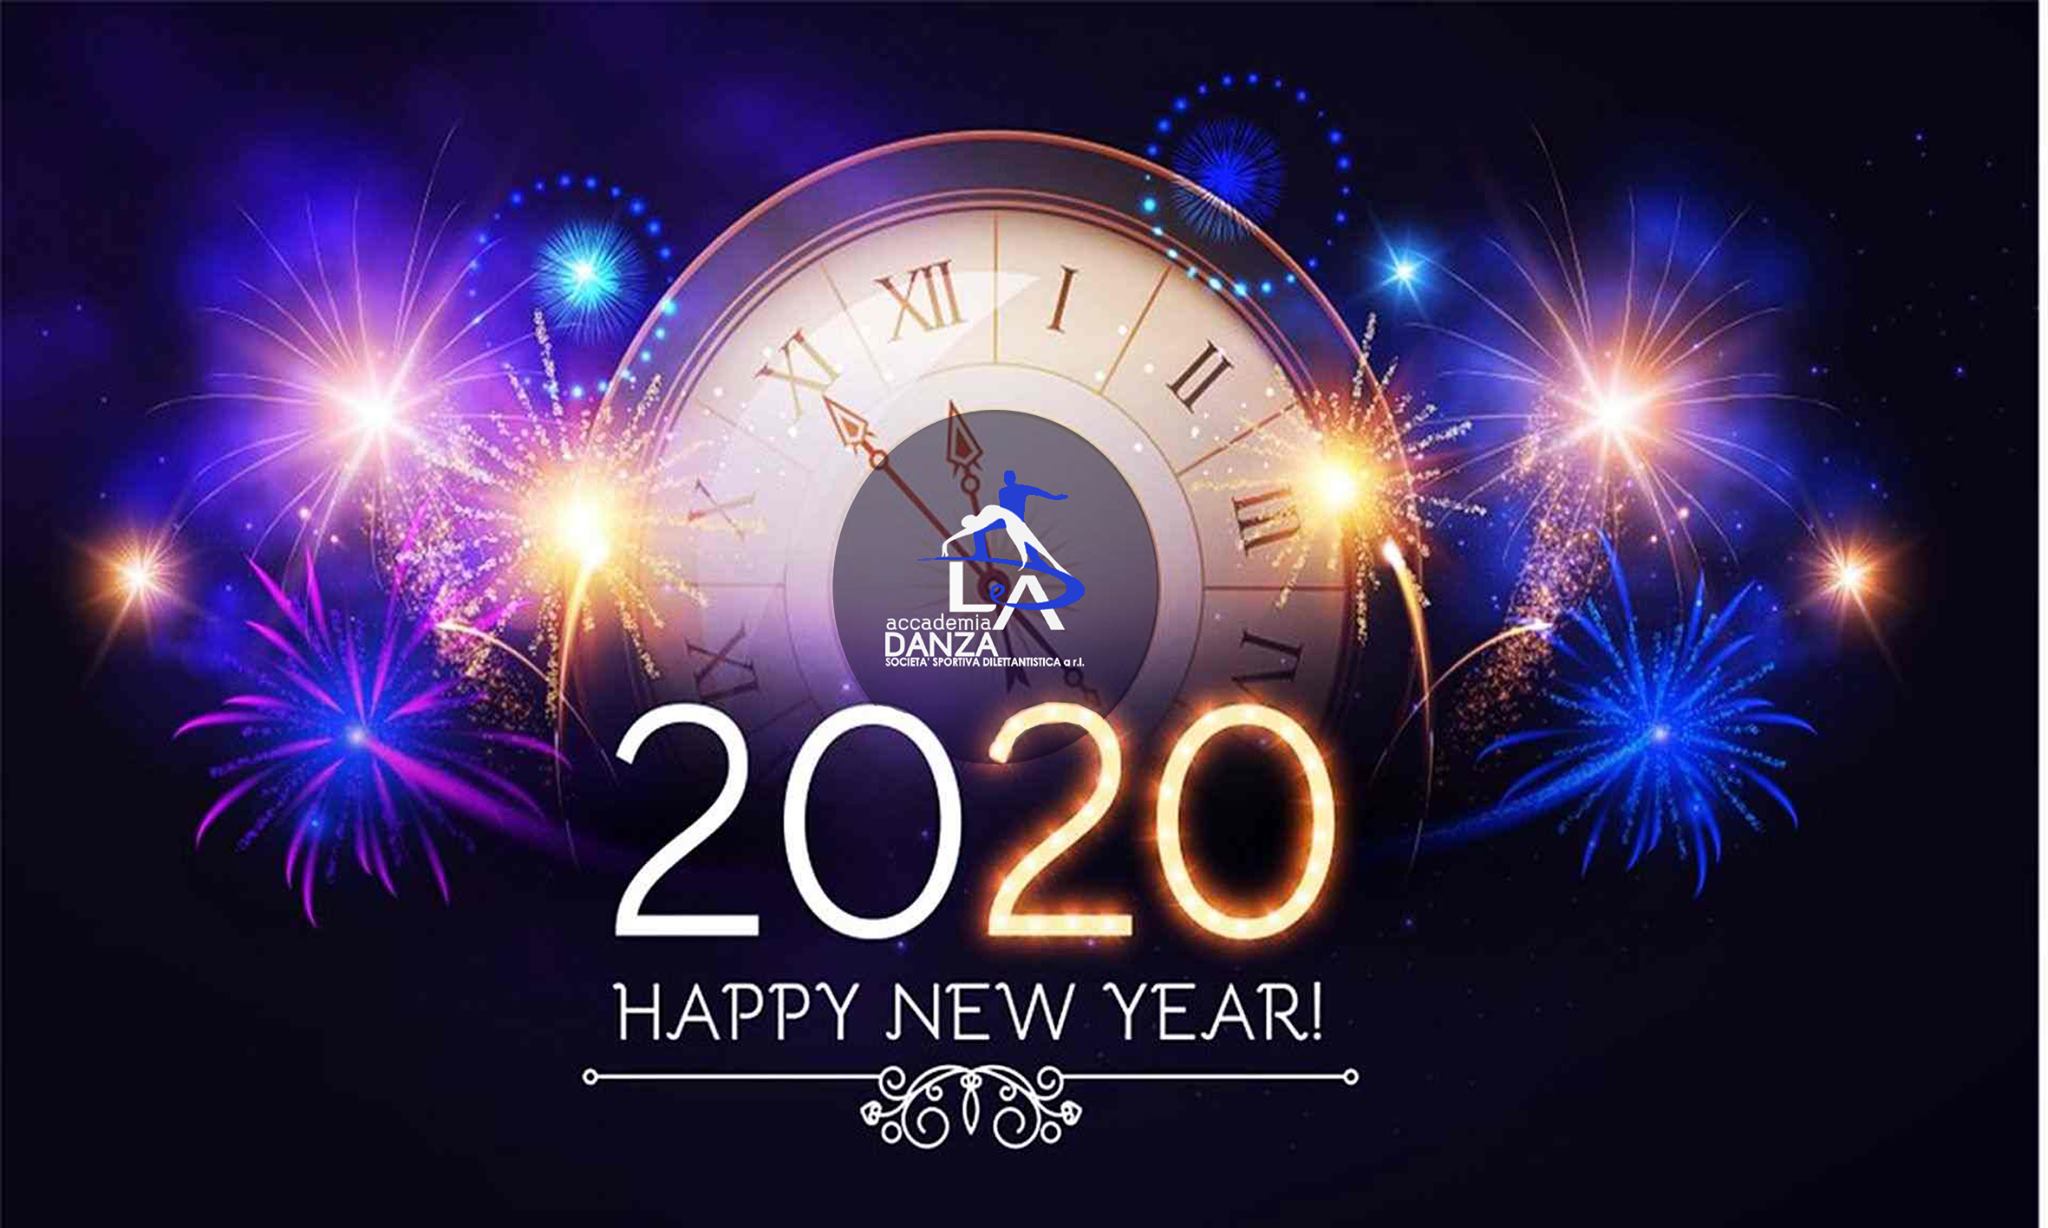 Новый год 20 февраля 2024. Новый год 2020 год. Happy New year картинки. Happy New year 2020. C yjdsv 2020 ujjv.